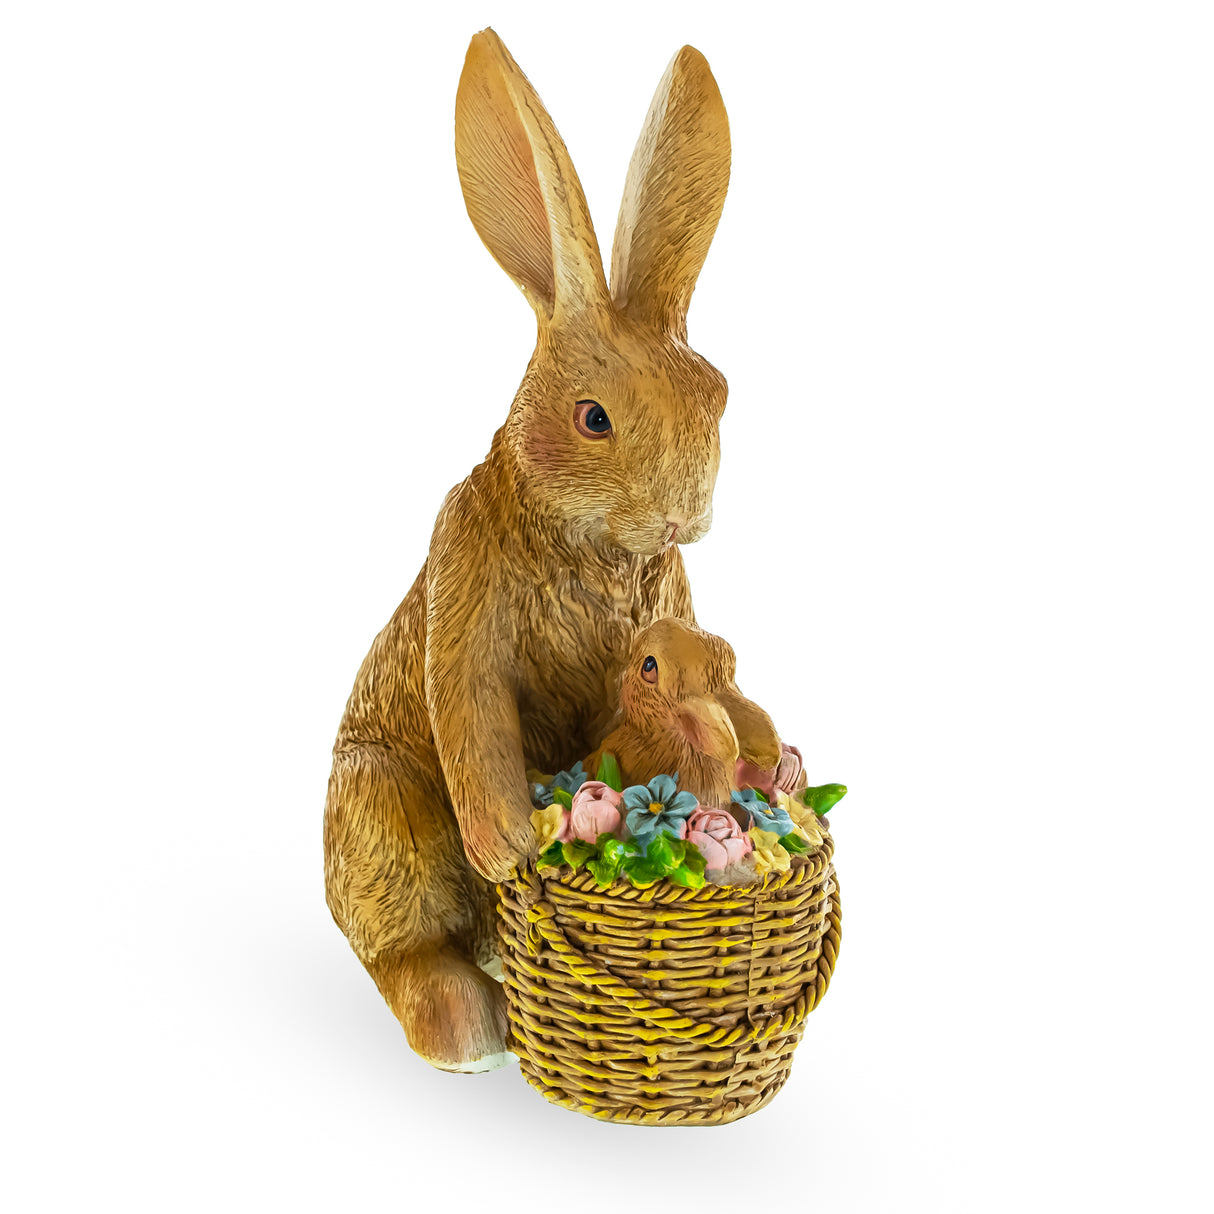 BestPysanky online gift shop sells Easter Bunny figurine decoration